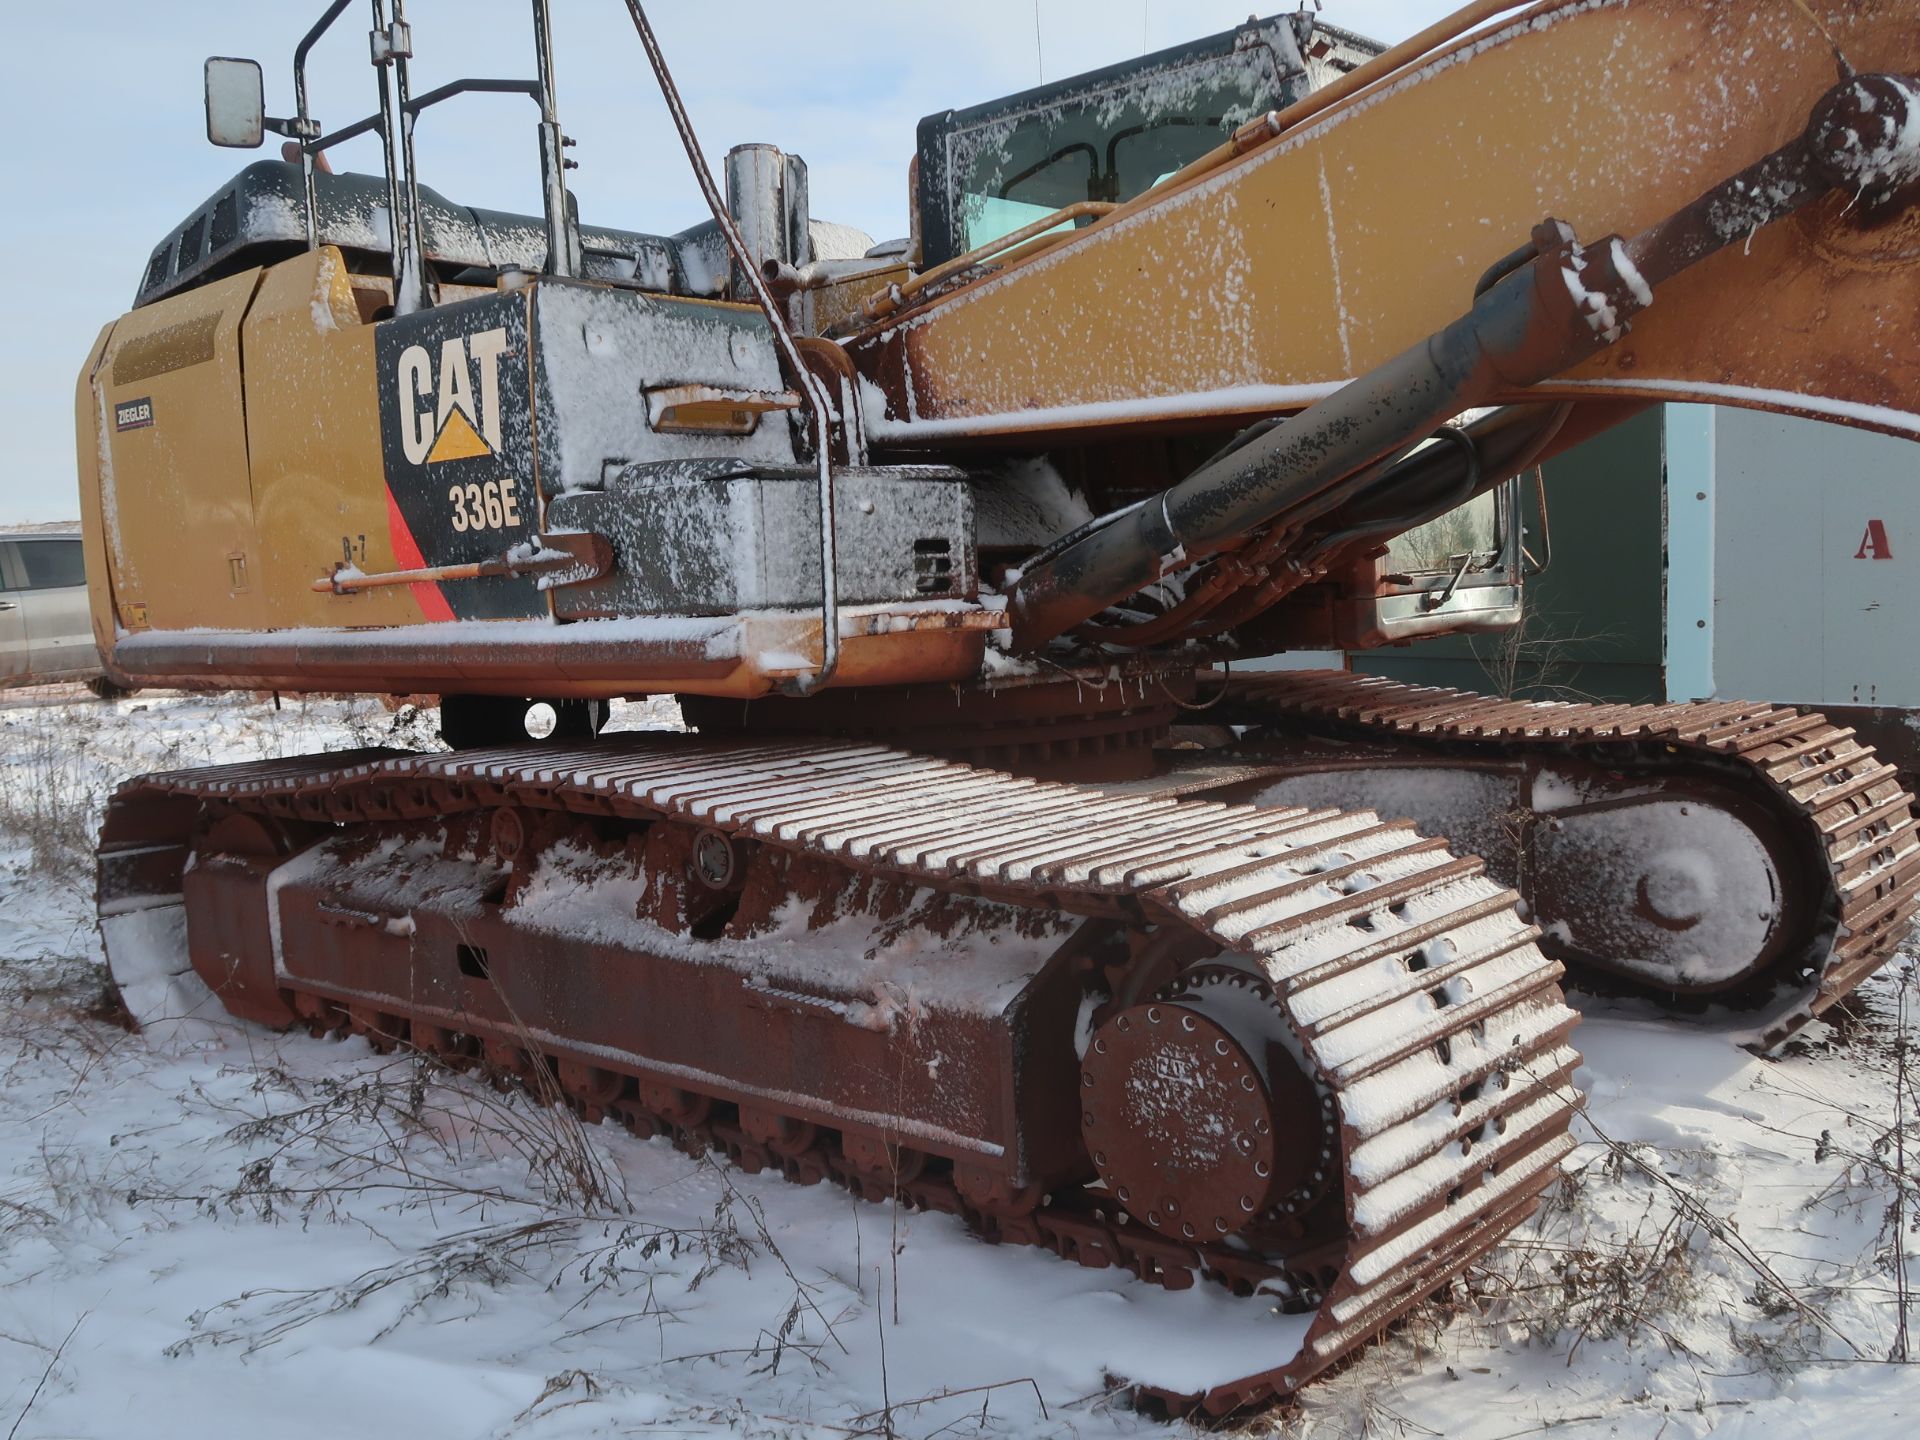 Caterpillar hydraulic excavator, model 336 EL - Image 3 of 6